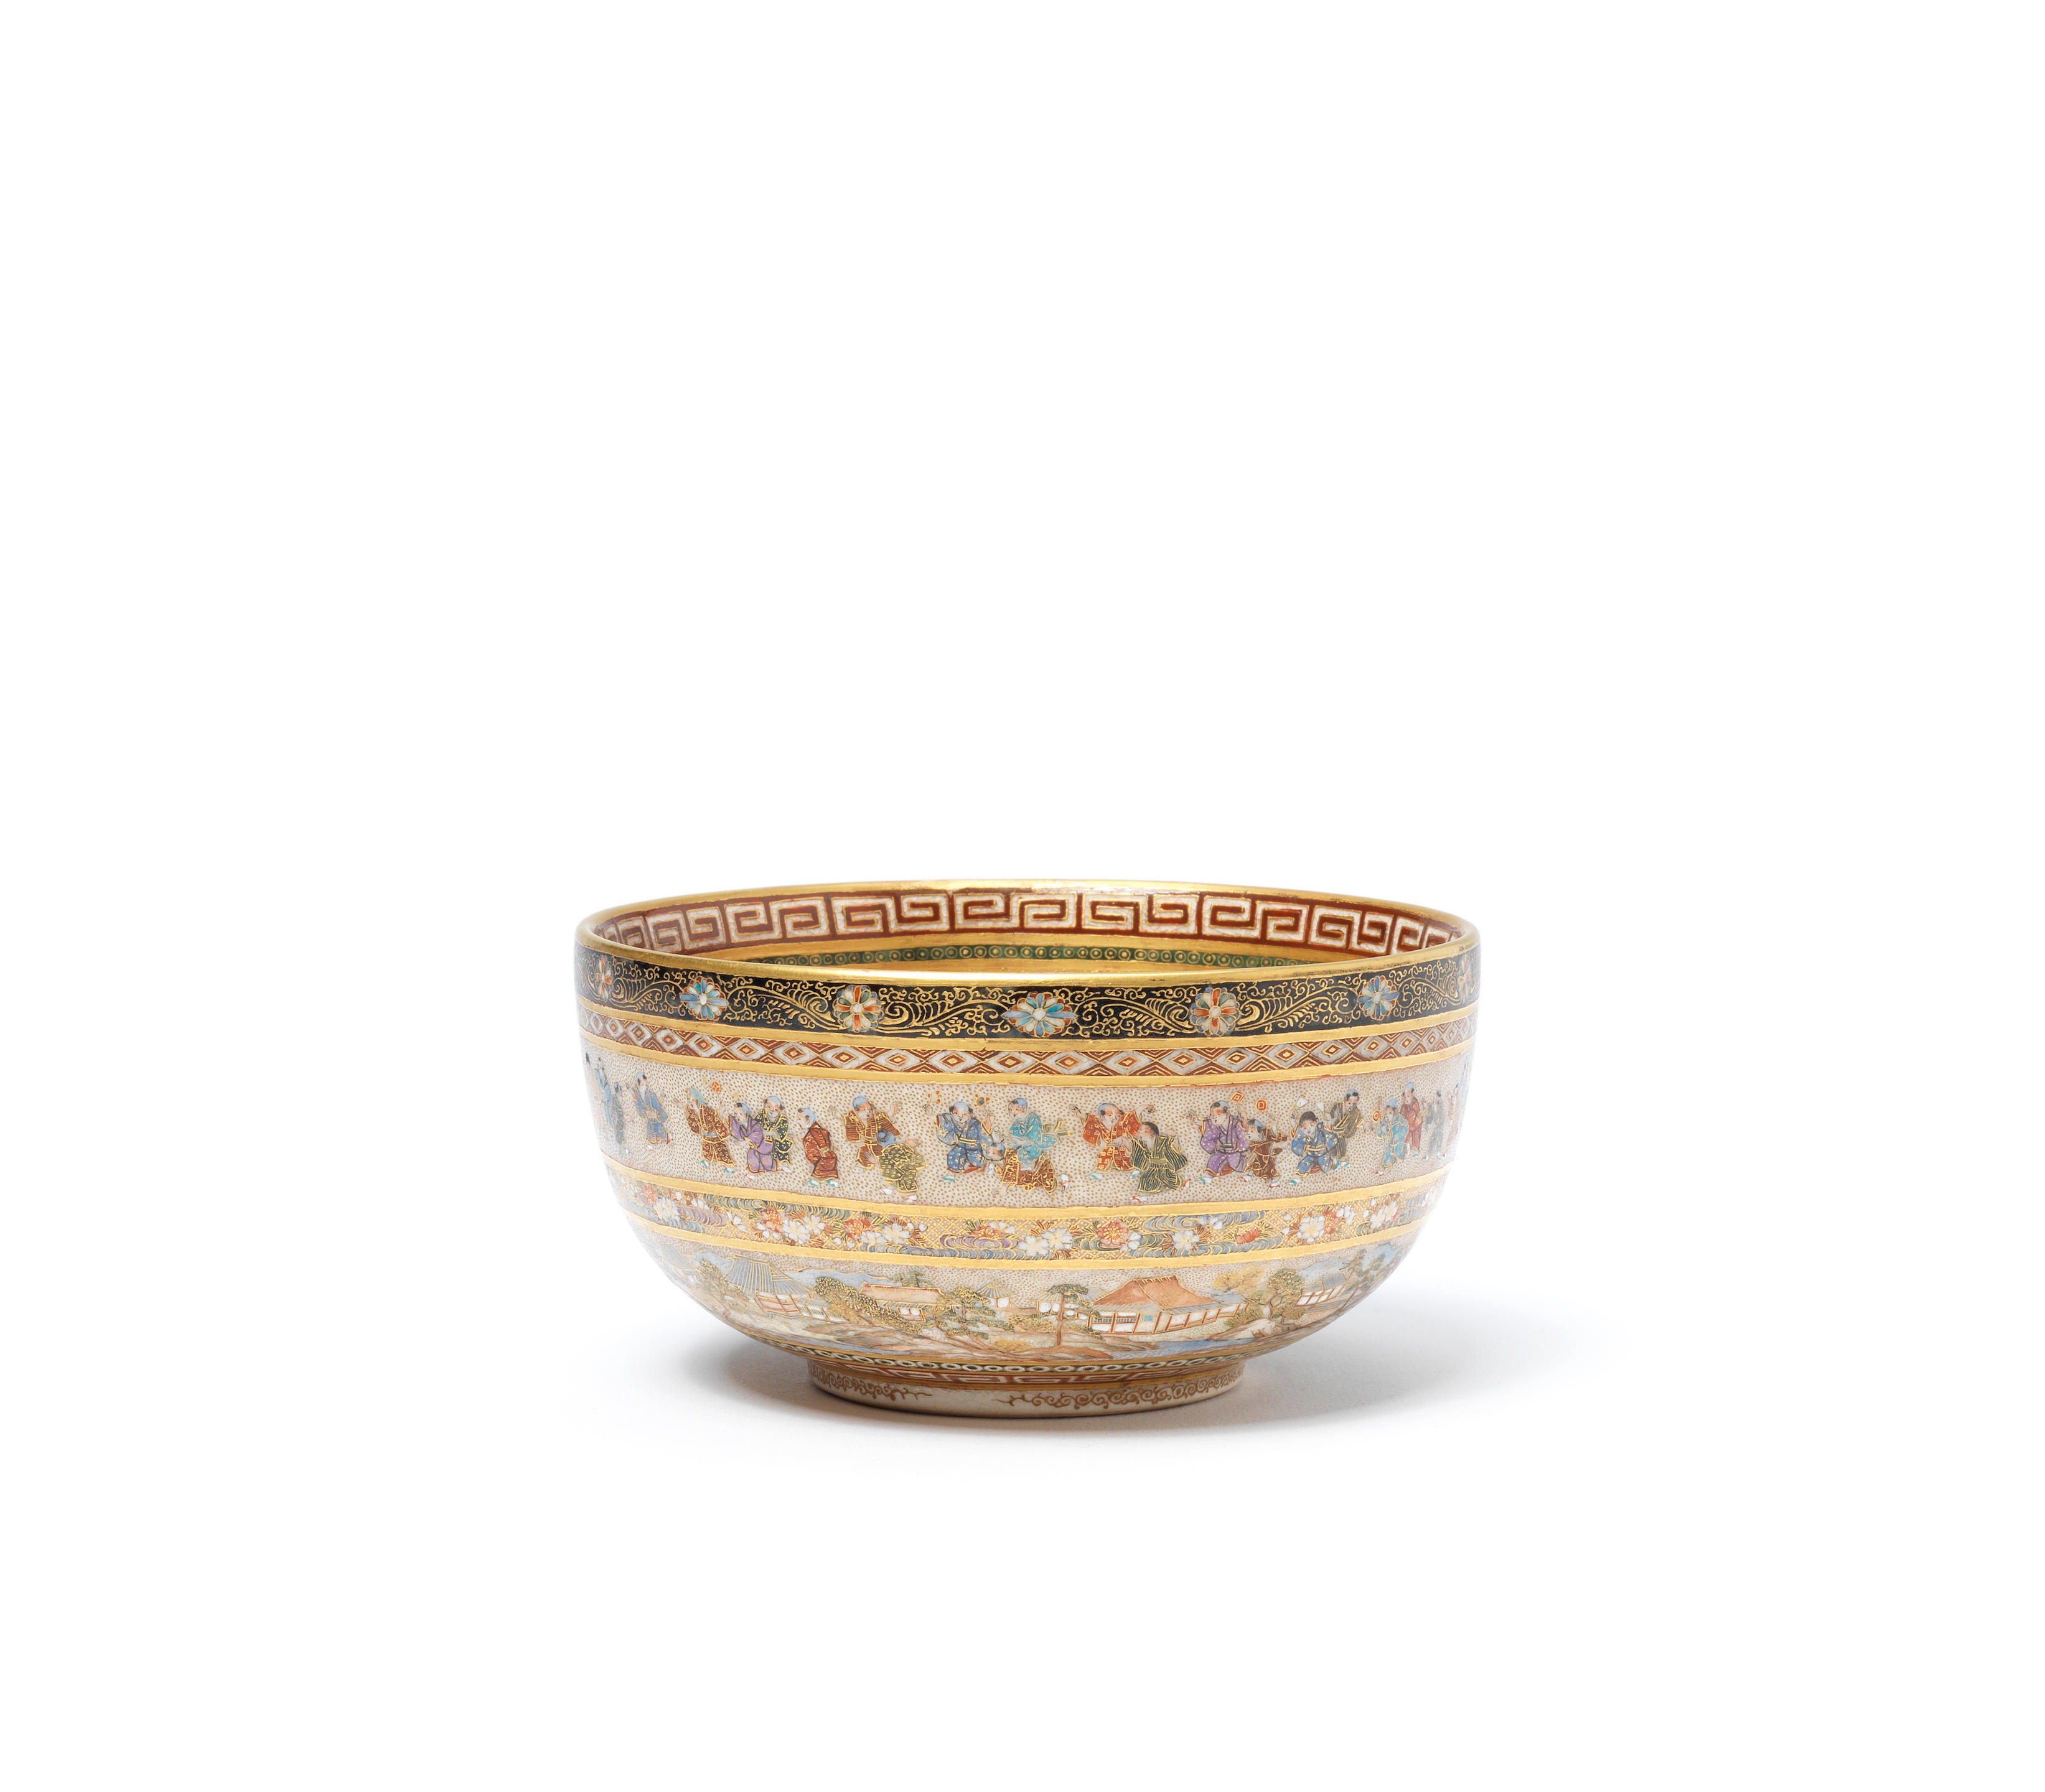 A Satsuma bowl